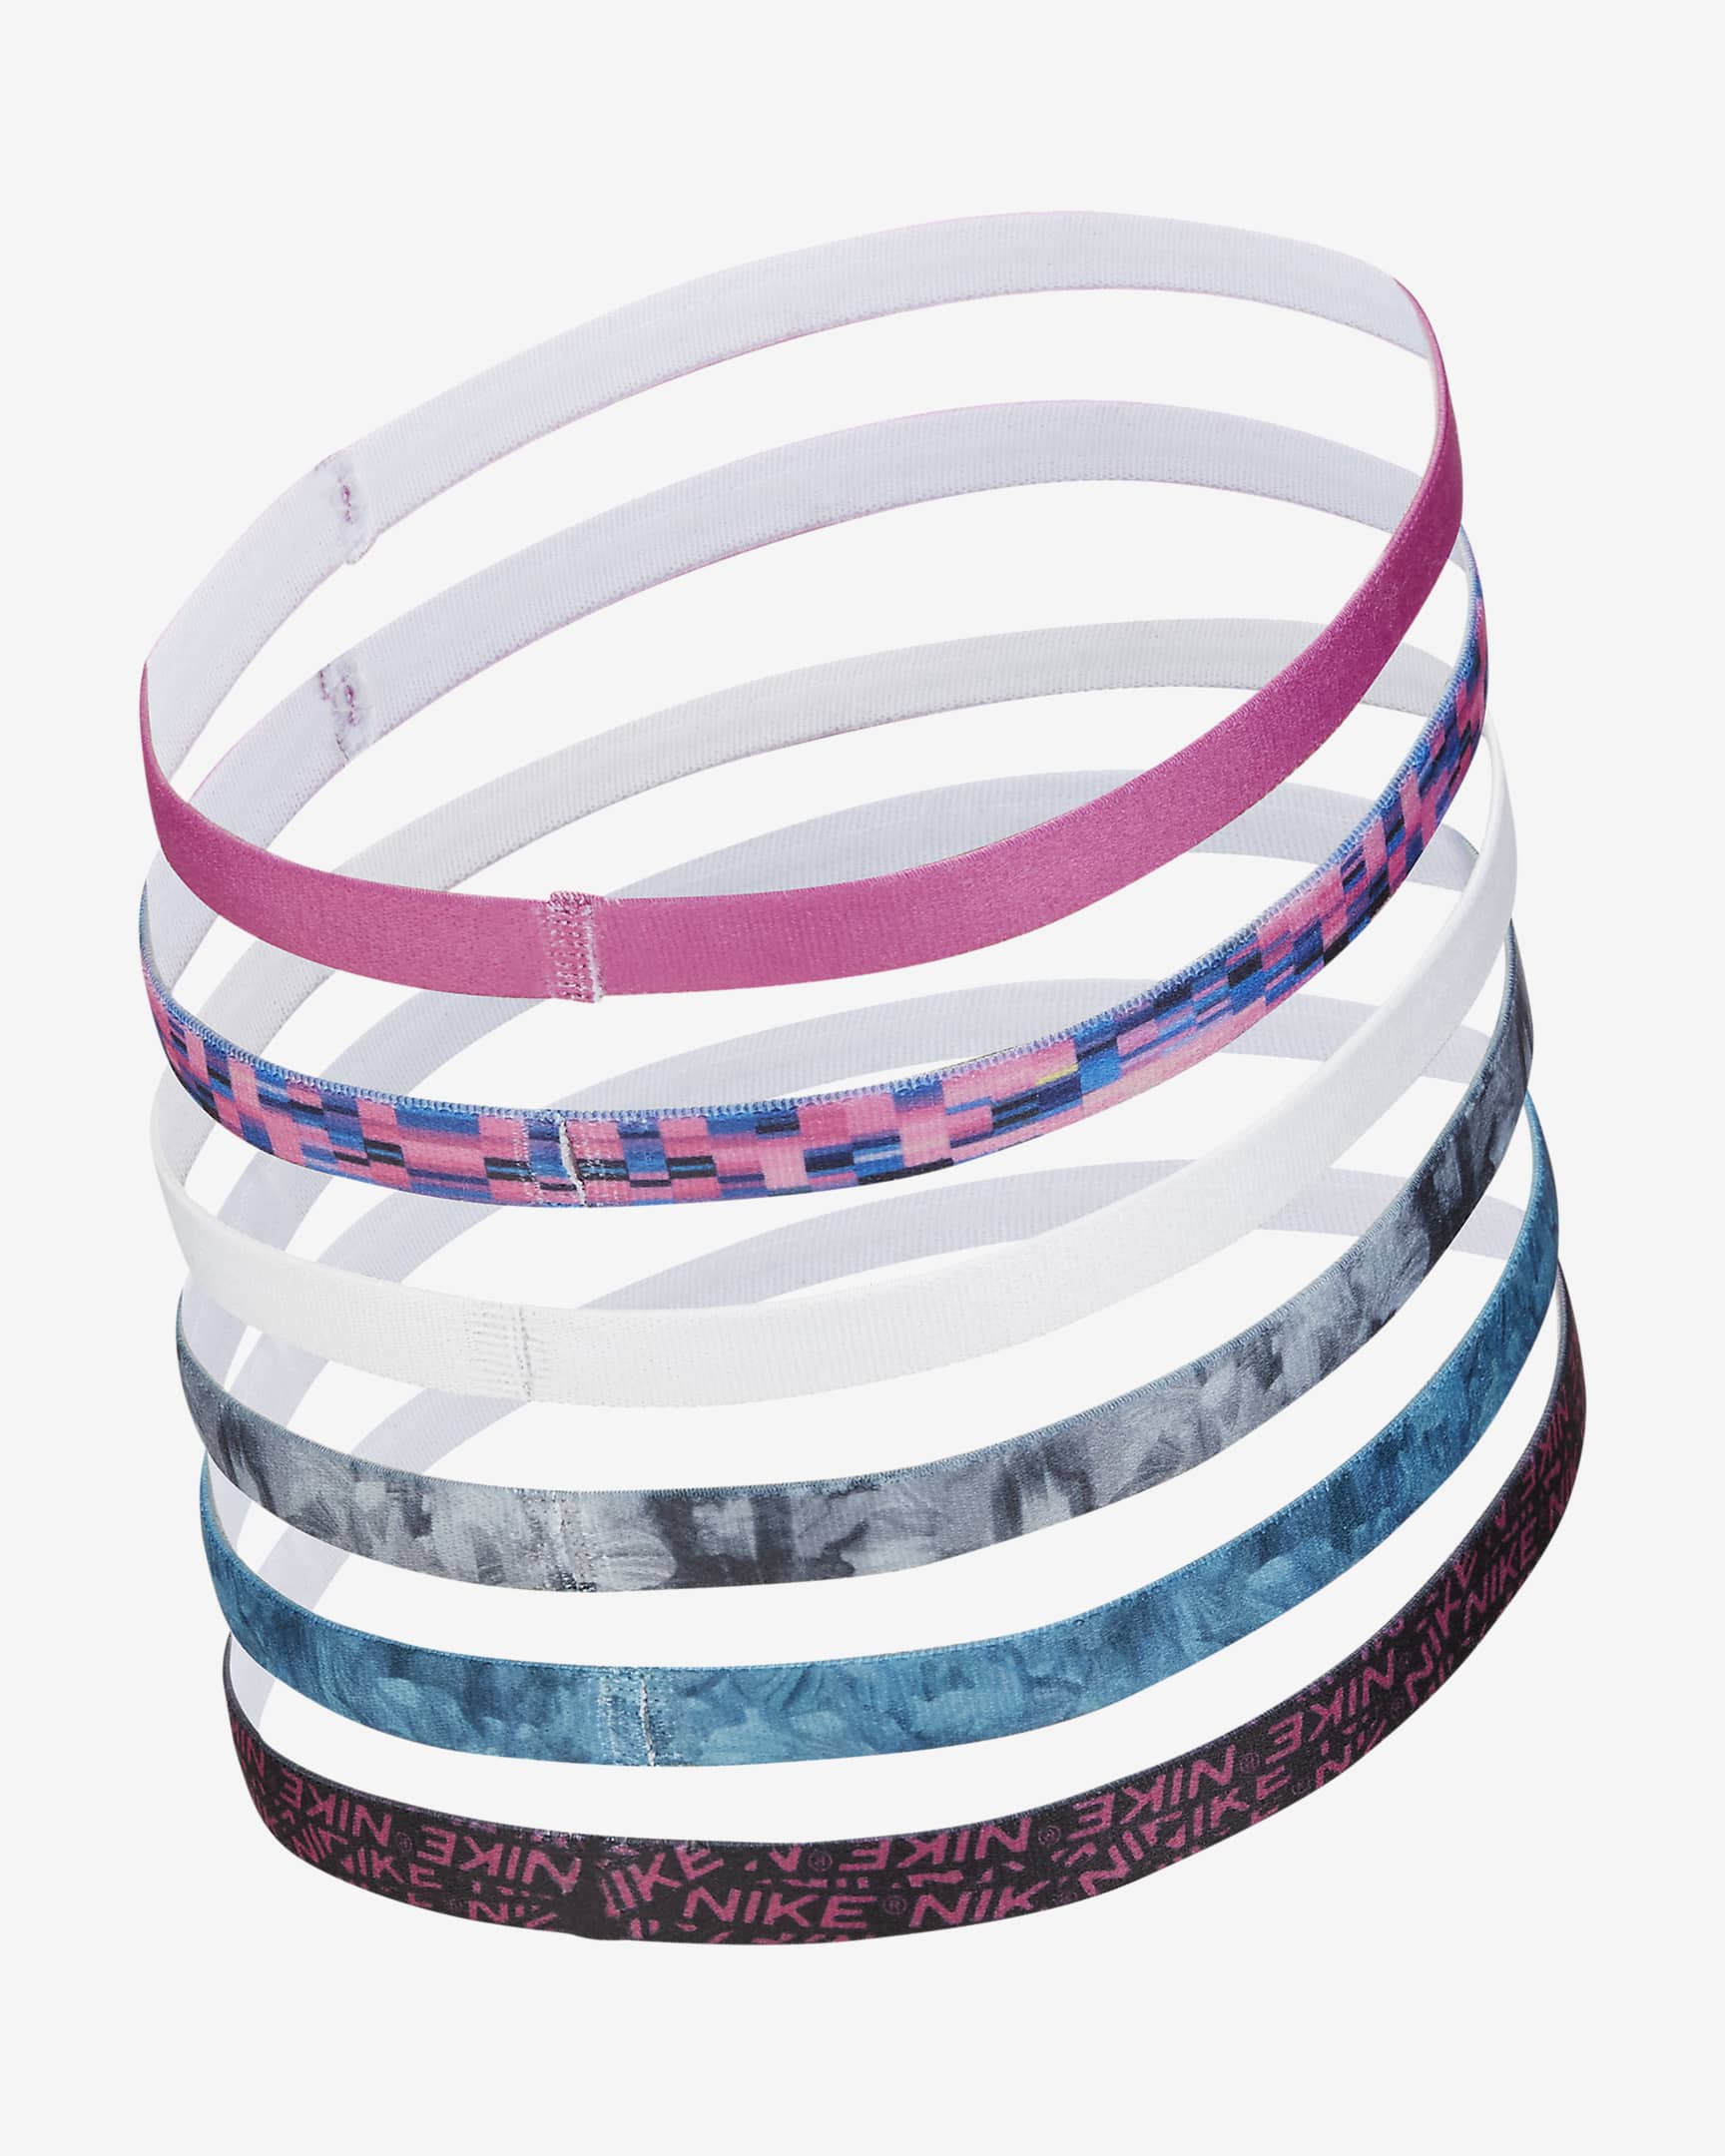 Nike Headbands (6 Pack) - Multi-Color